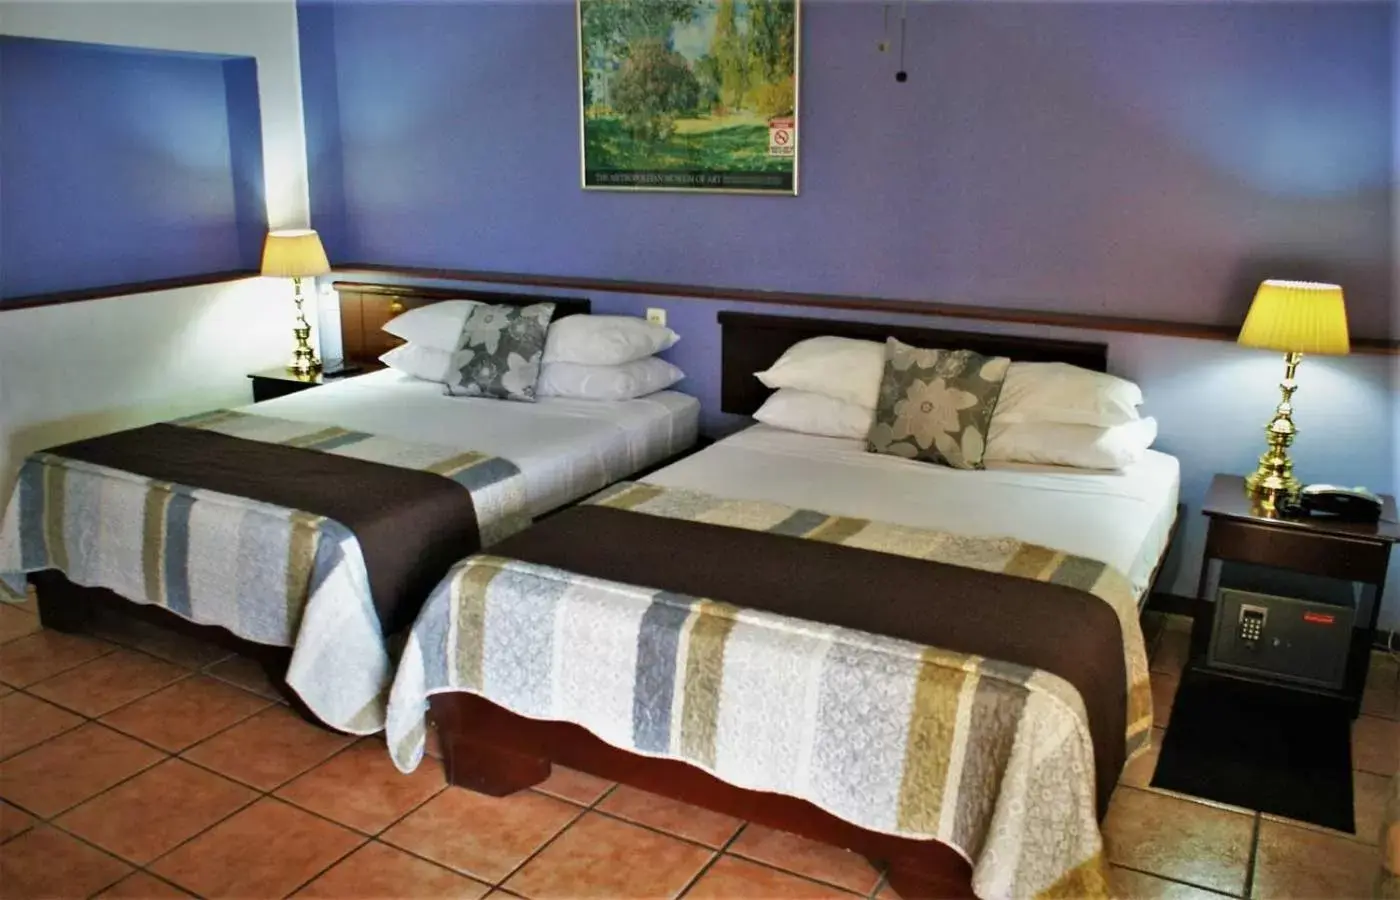 Bed in Hotel Puerta del Sol - San Jose Airport